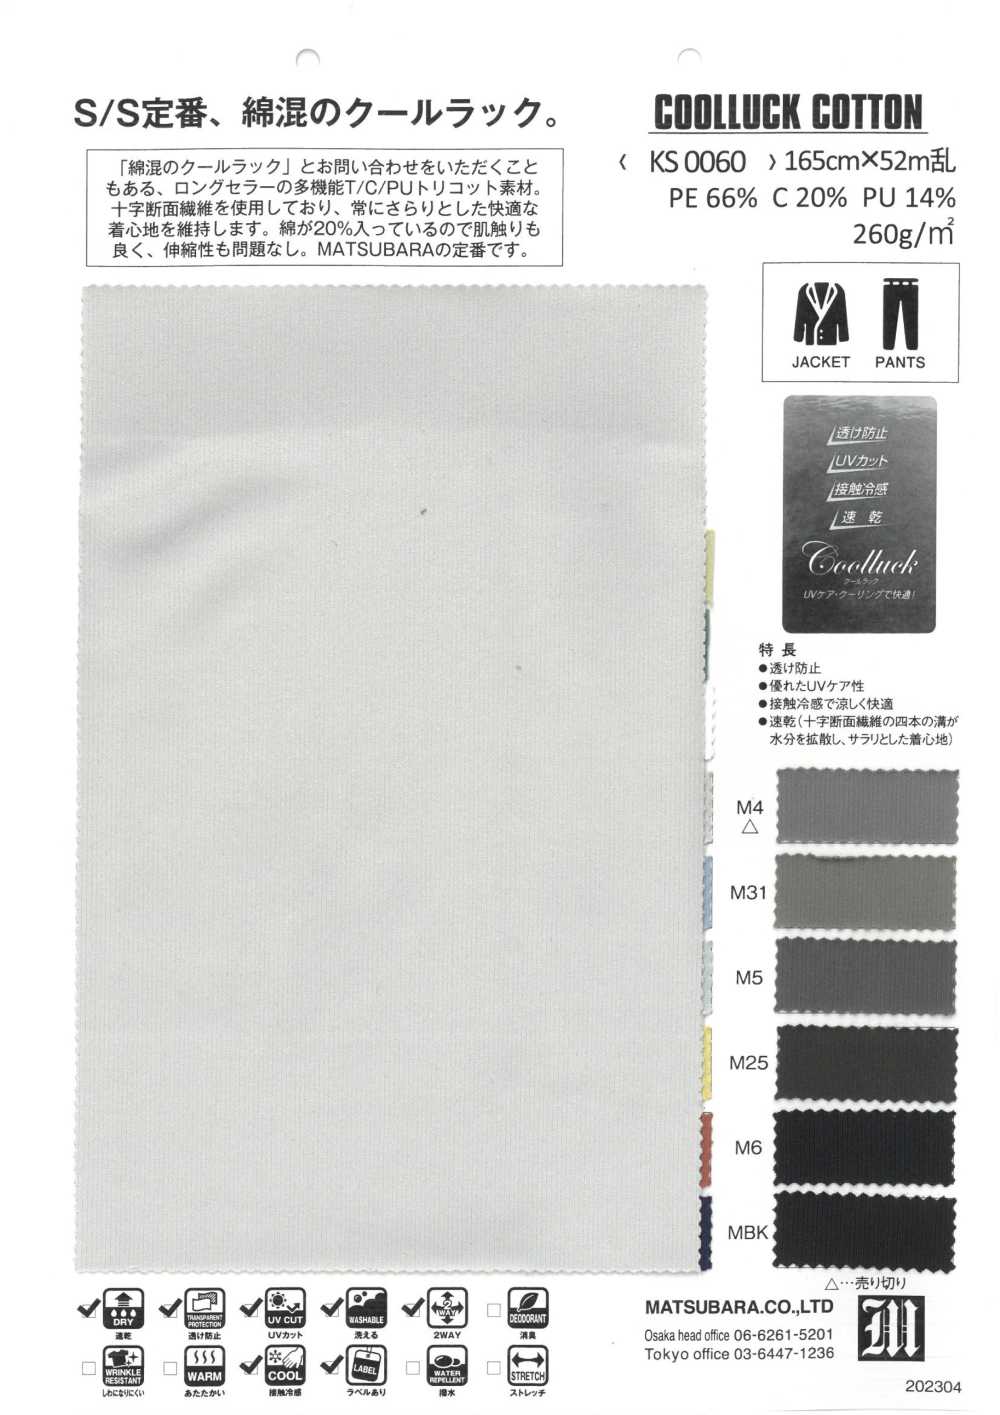 KS0060 COOLLUCK COTTON[Textile / Fabric] Matsubara